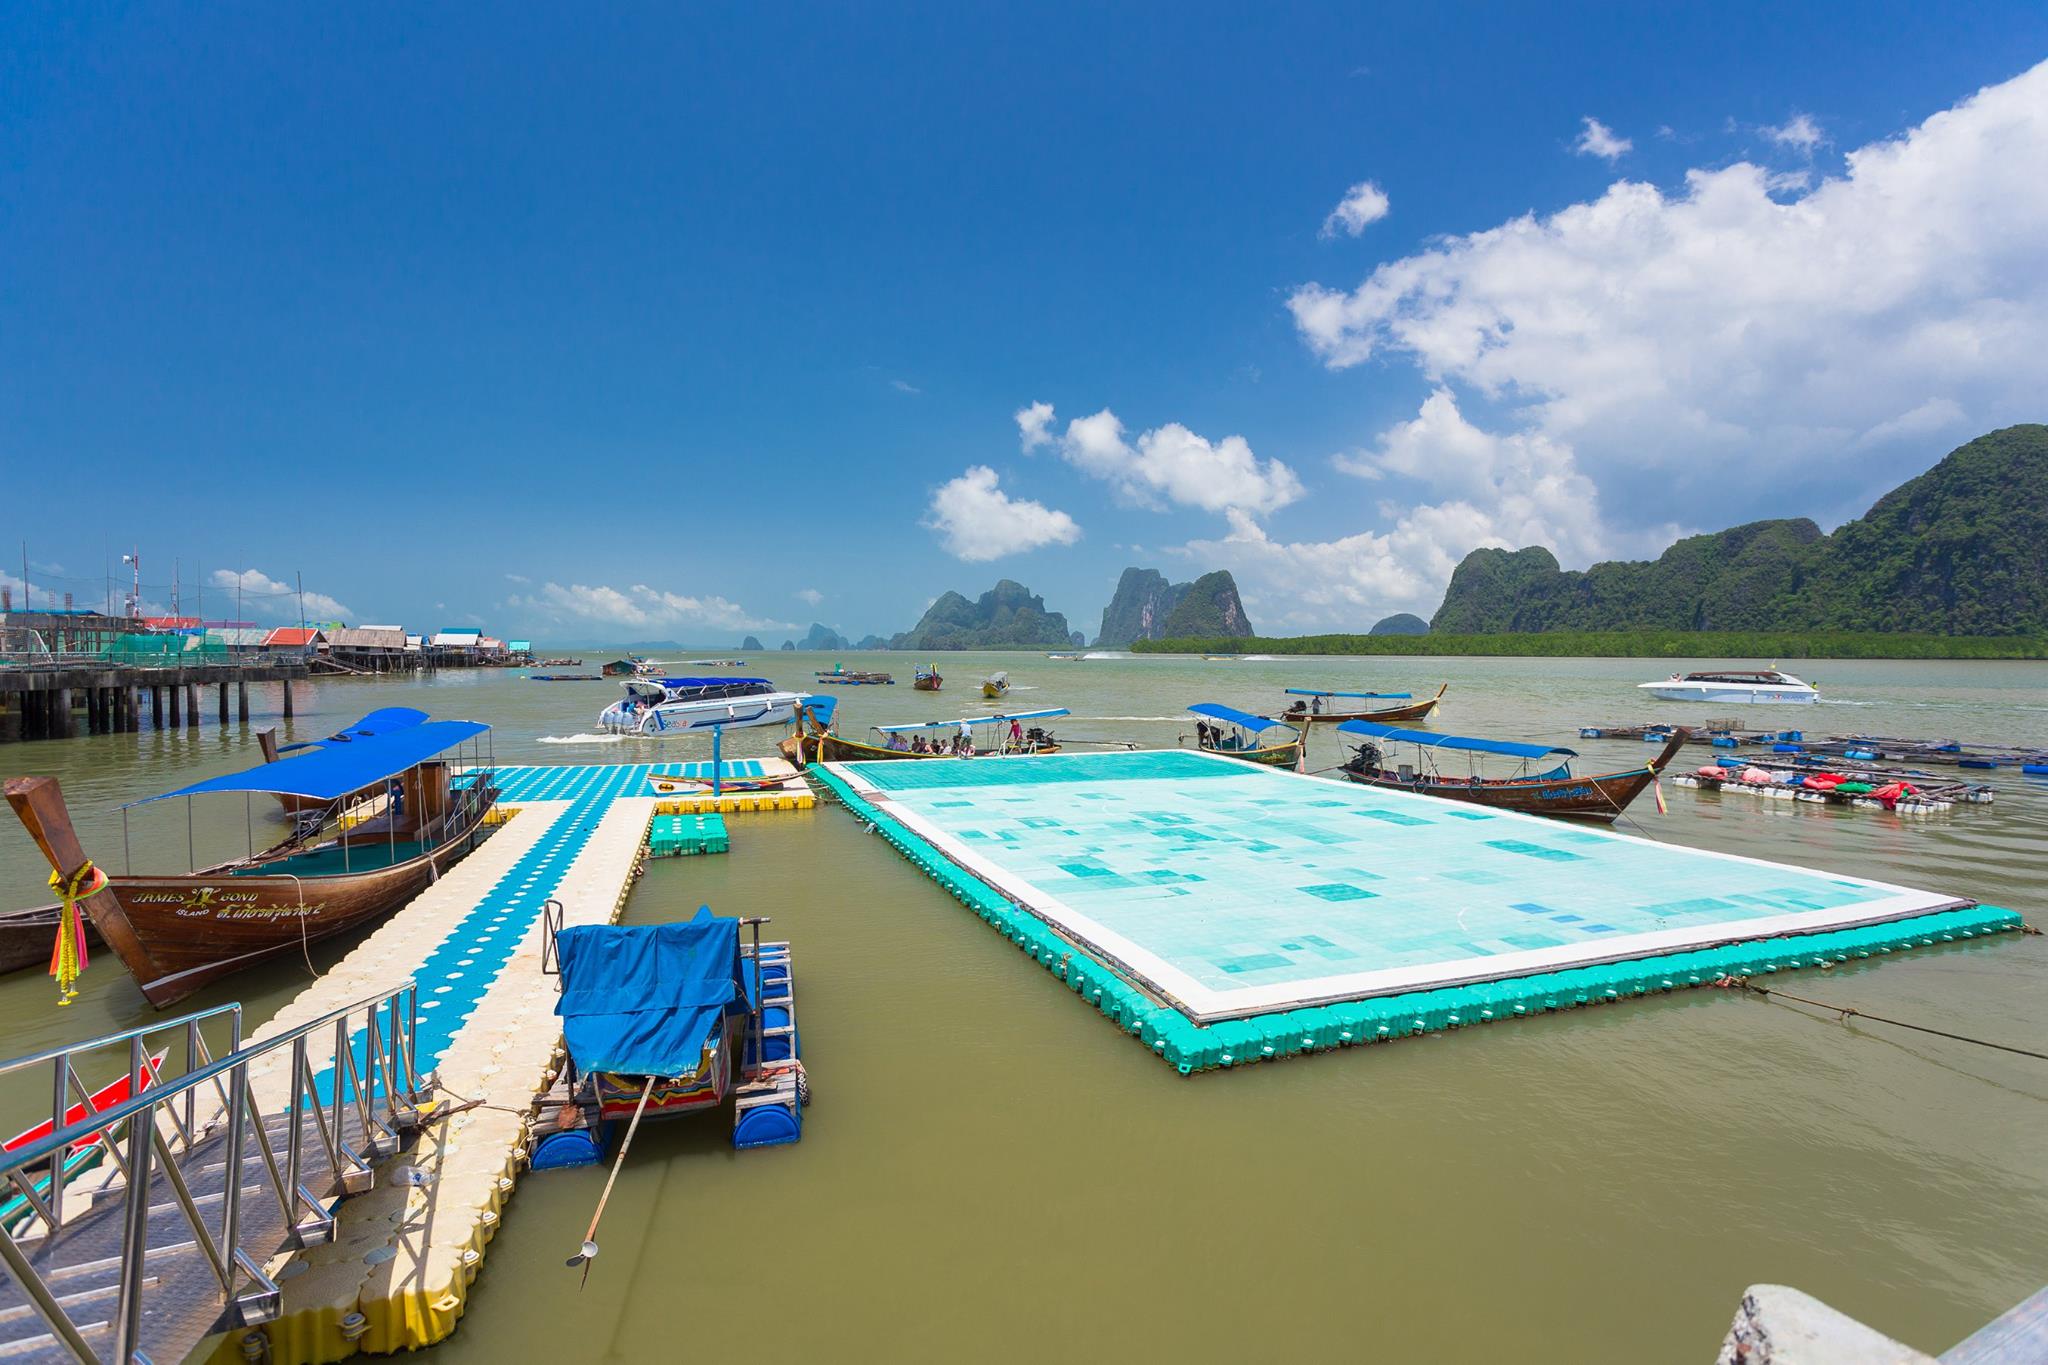 Floating football pitch at Panyi island